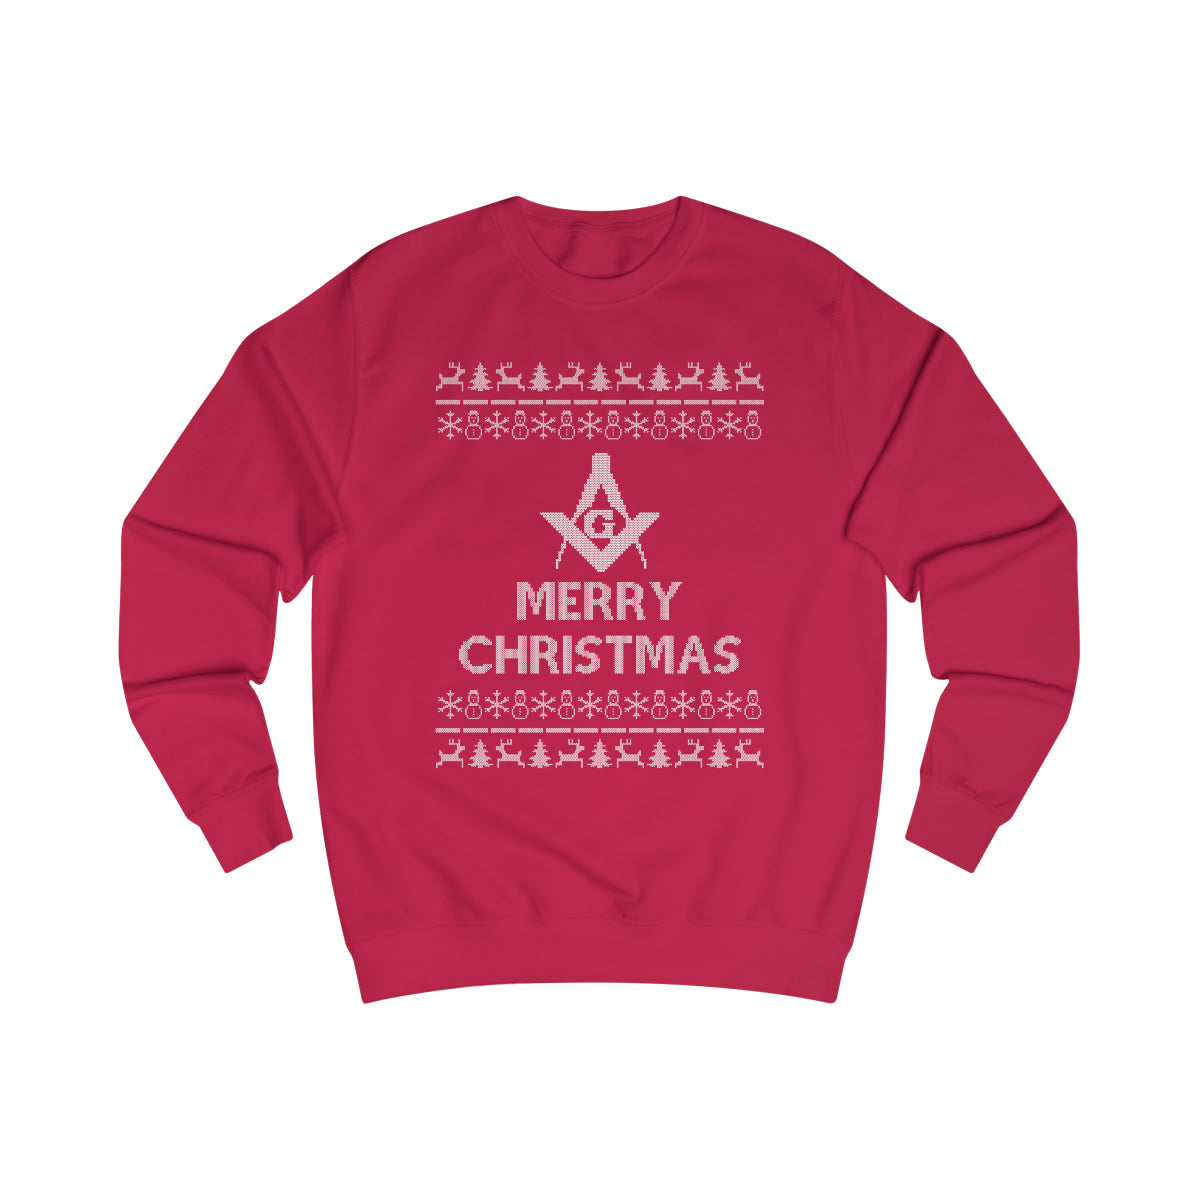 Master Mason Blue Lodge Sweatshirt - Ugly Merry Christmas Sweater